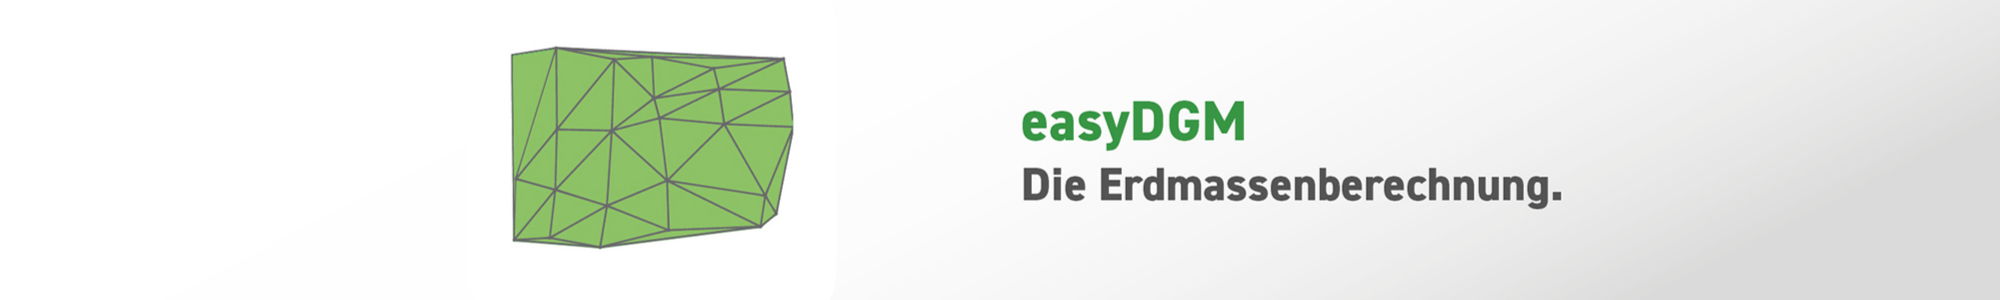 easyDGM - isl-kocher GmbH